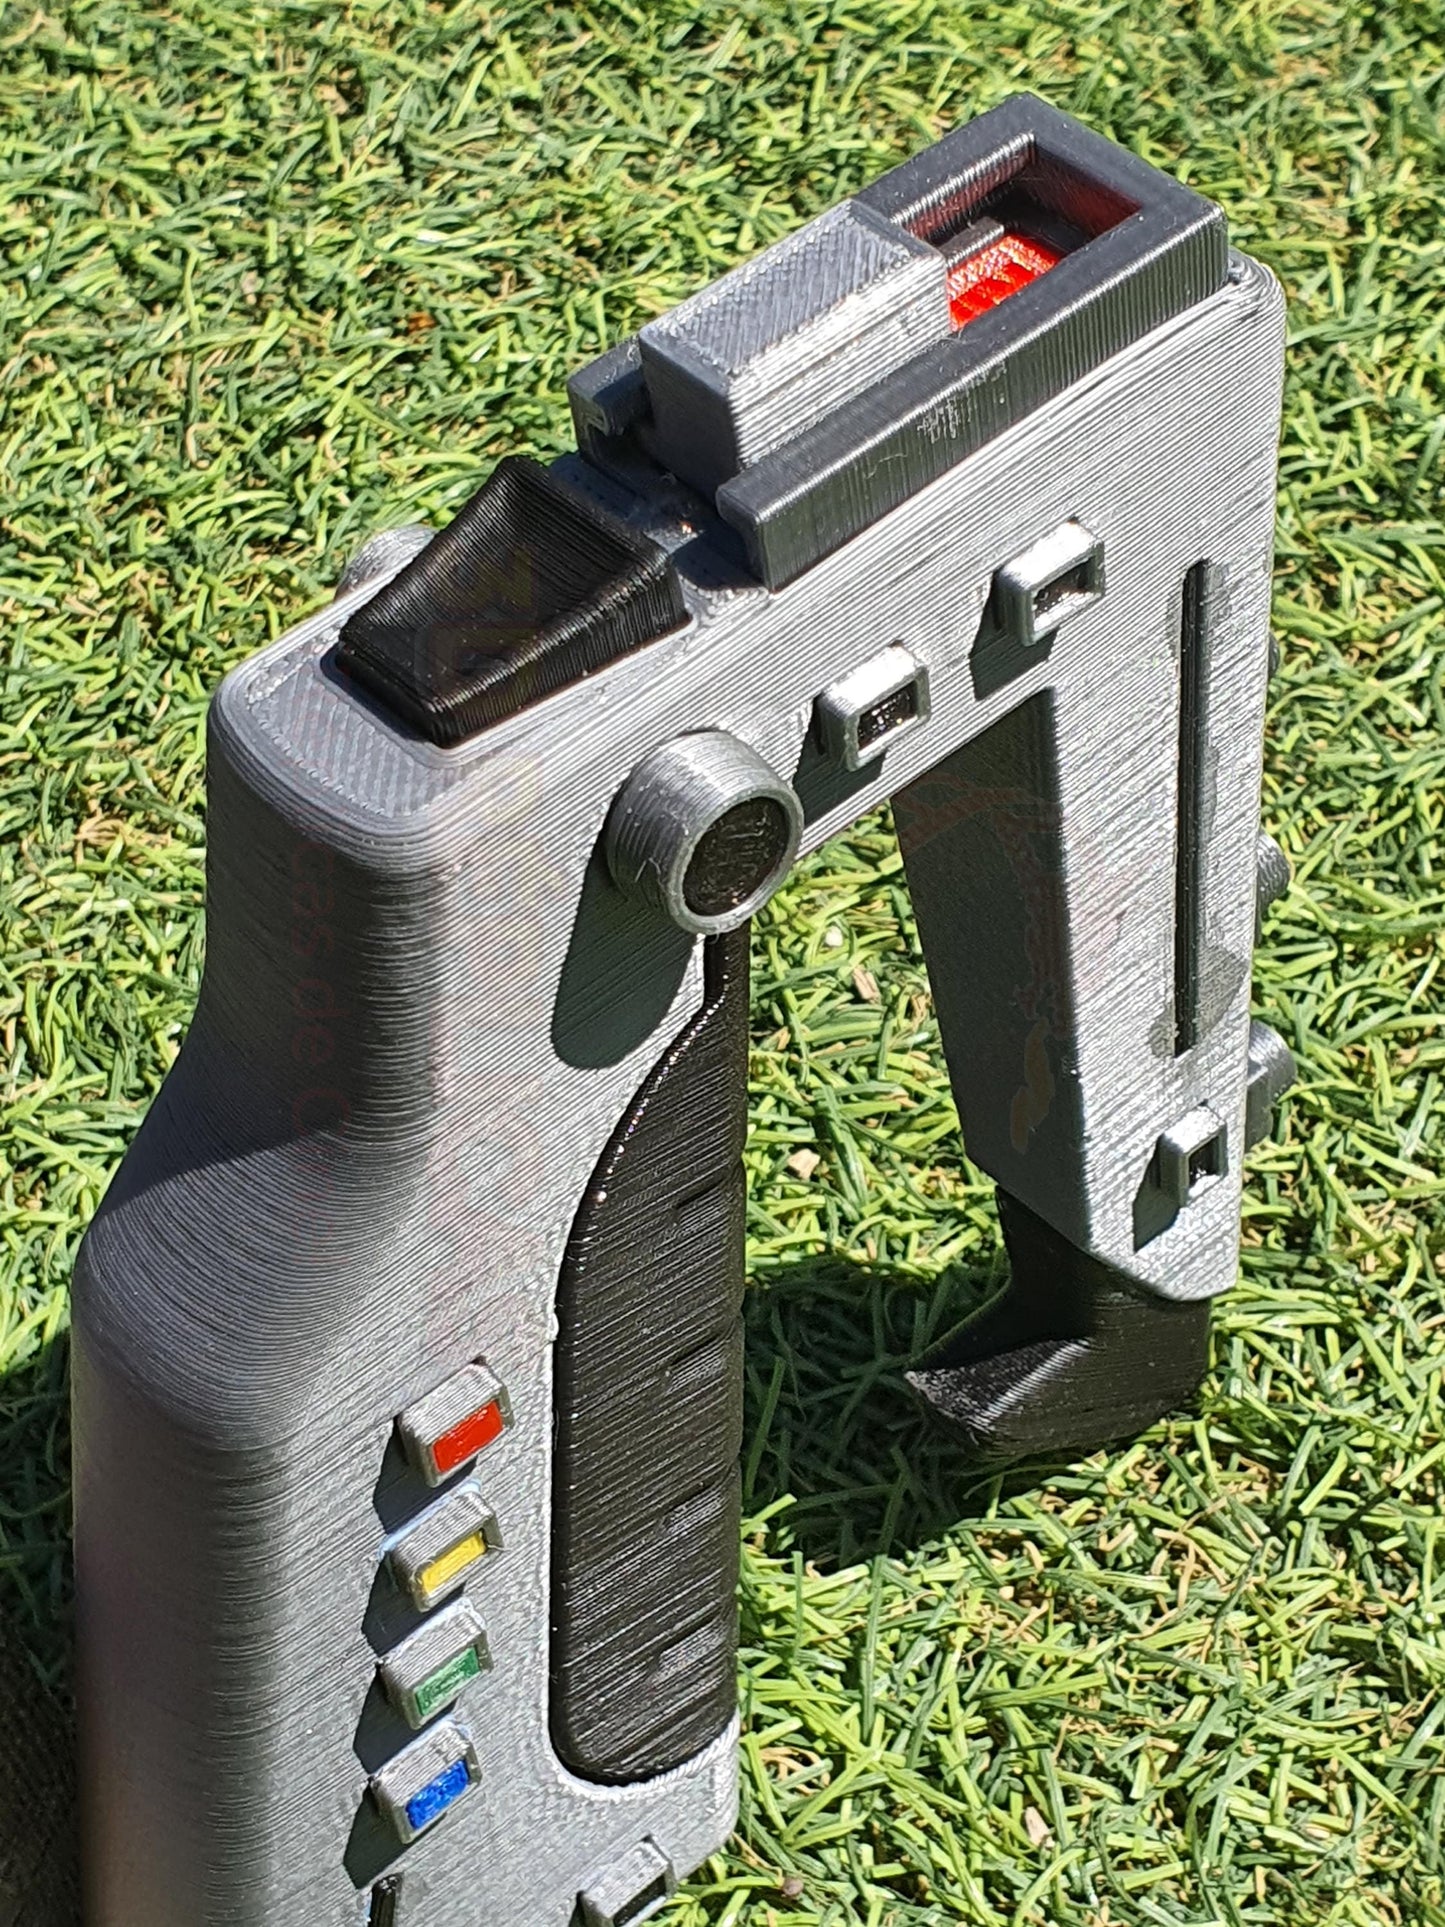 Space 1999 Stun Gun Prop Replica Pistol Cosplay Blaster